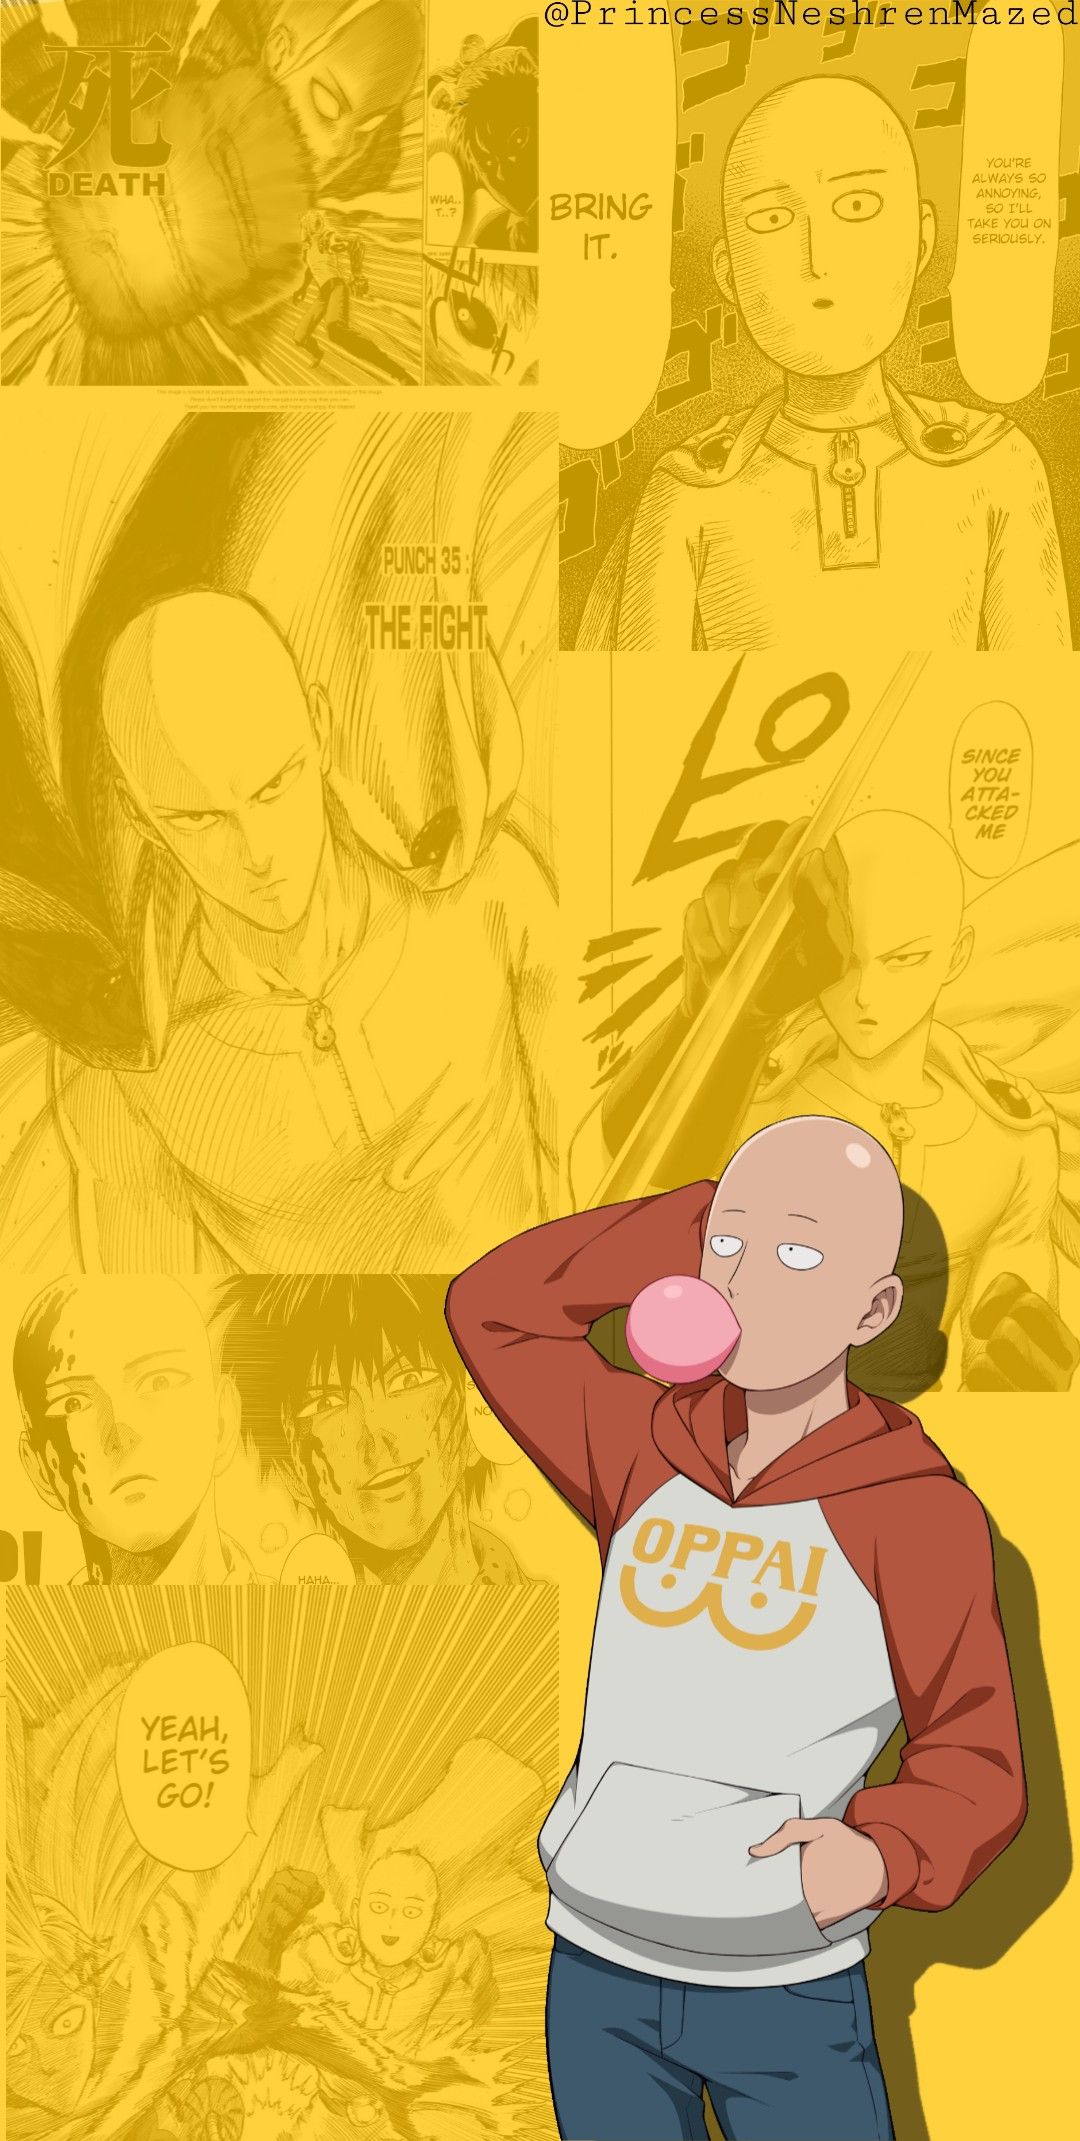 Saitama One Punch Man Anime Wallpaper 4k HD ID:3217